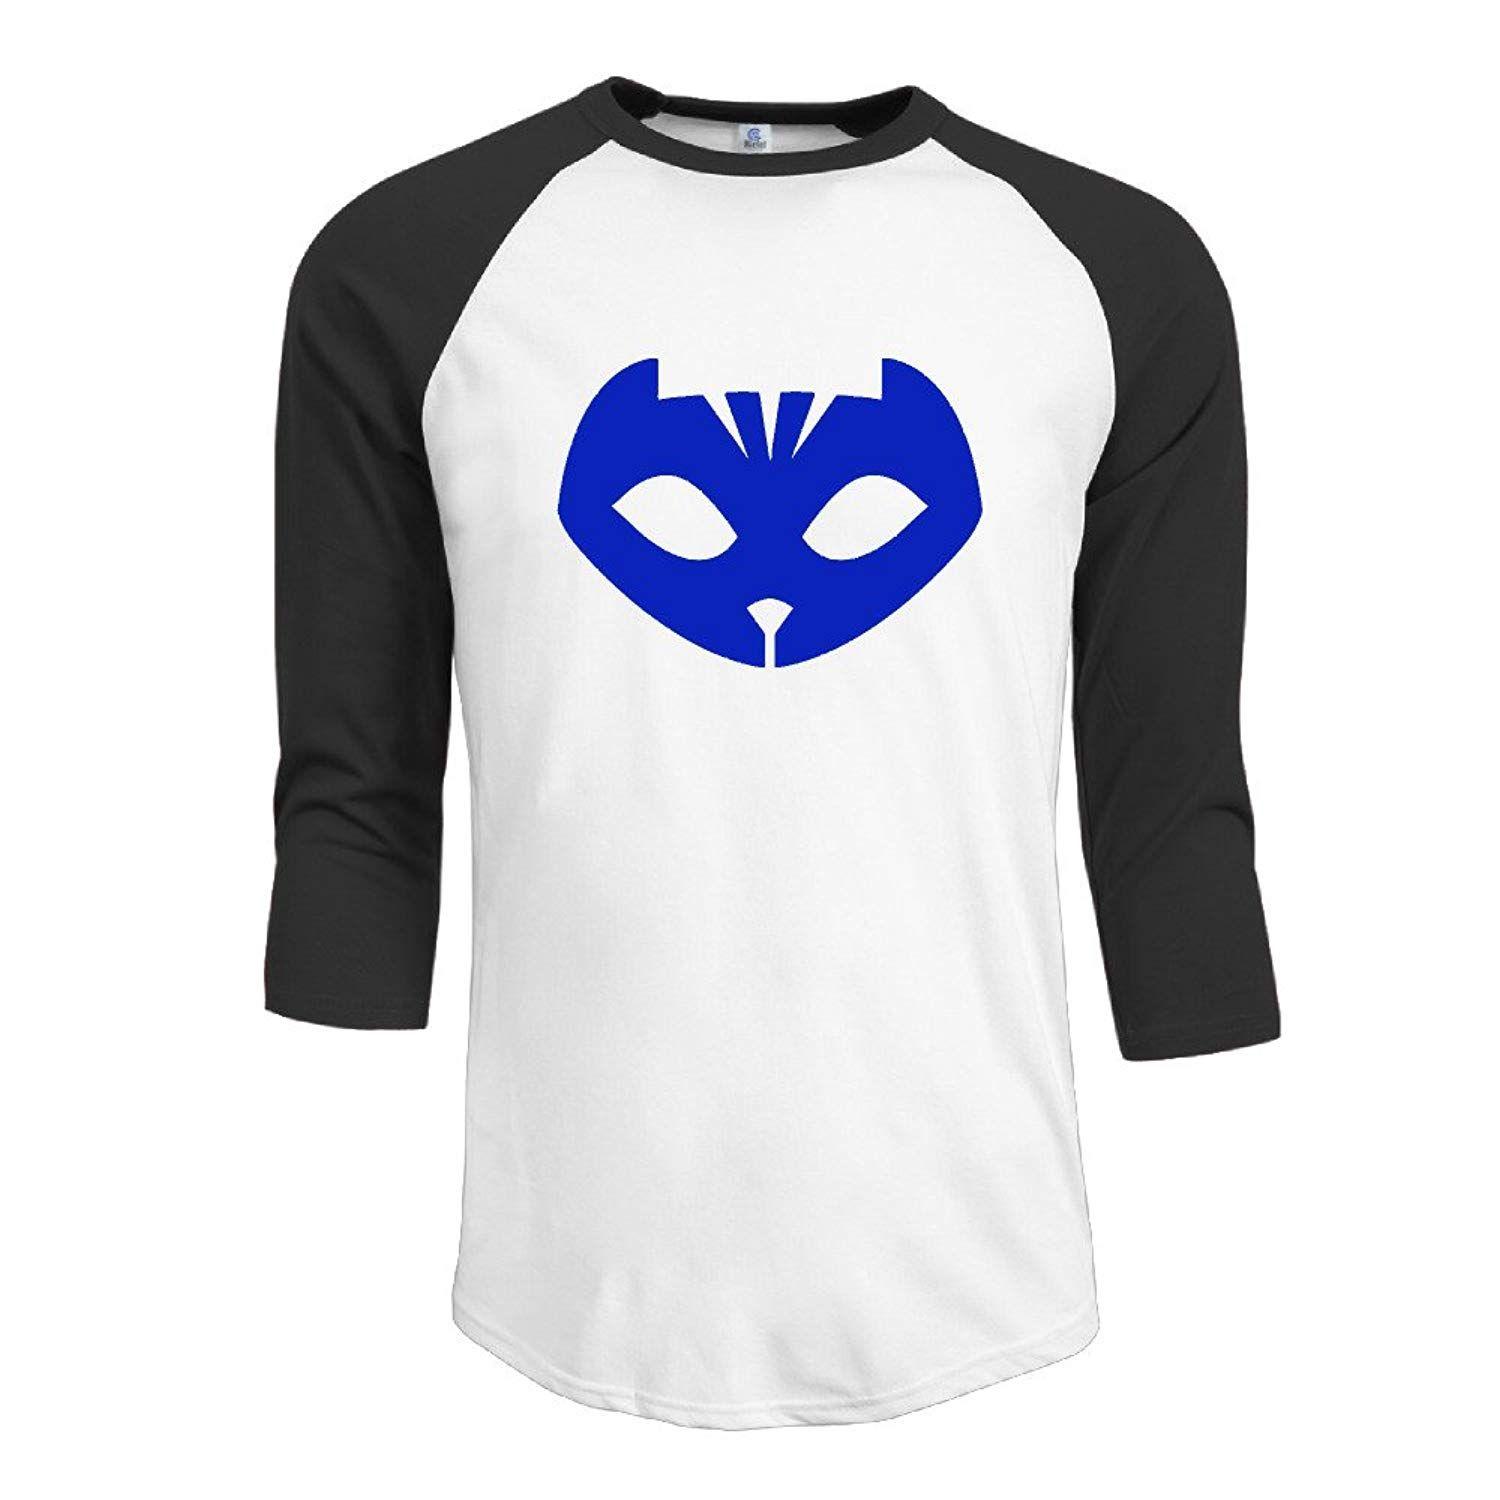 Catboy Logo - Amazon.com: Men's PJ Masks Catboy Logo 3/4 Sleeve 100% Cotton ...